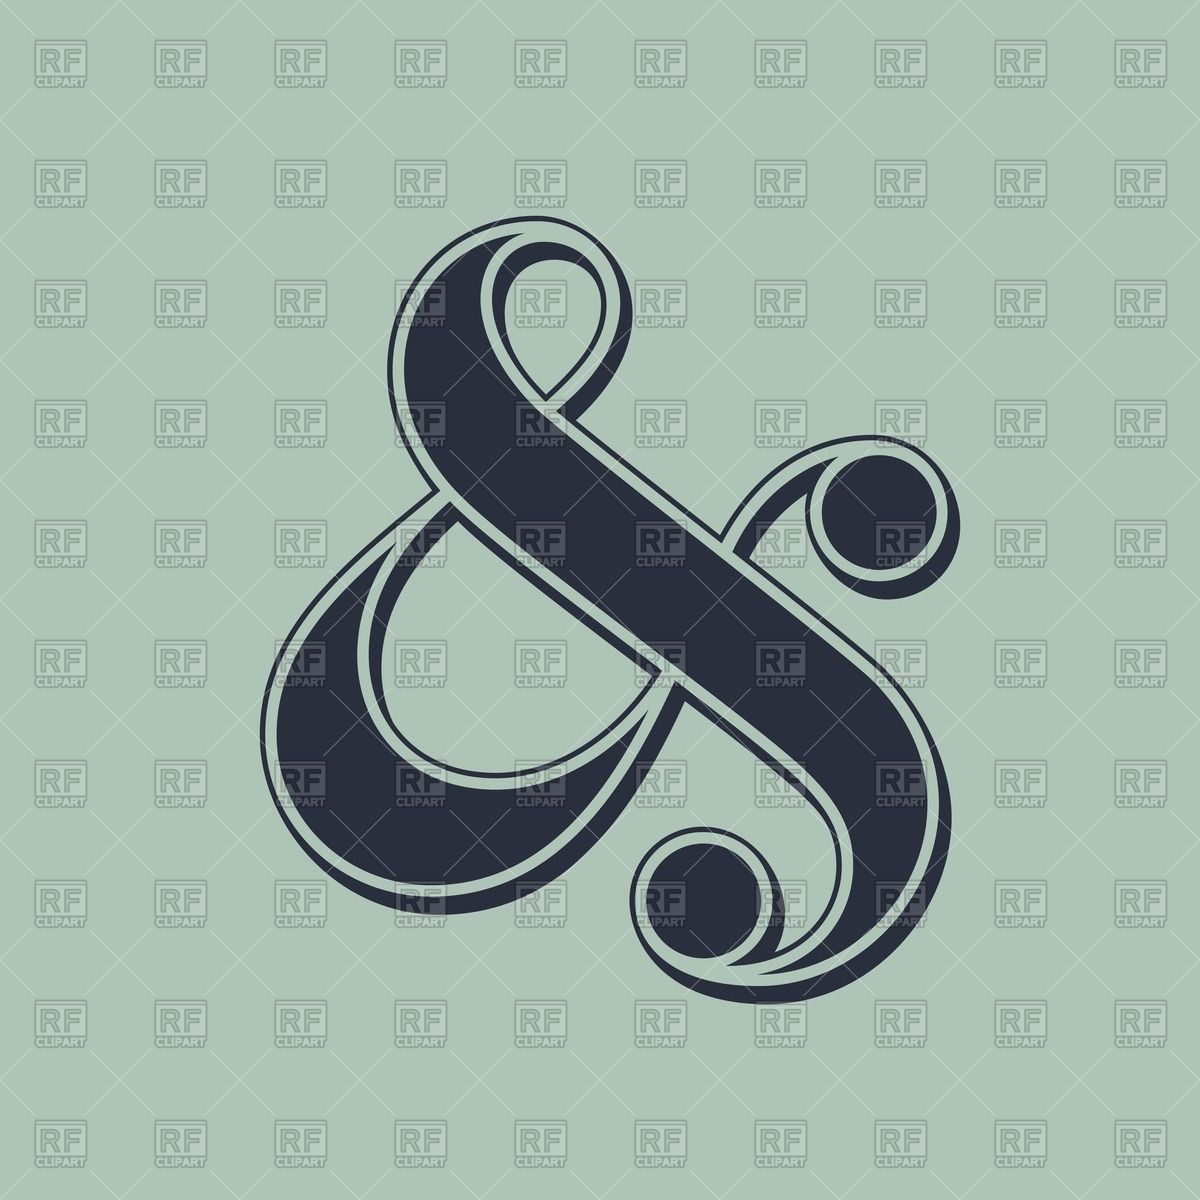 Elegant And Stylish Ampersand Symbol 51702 Download Royalty Free